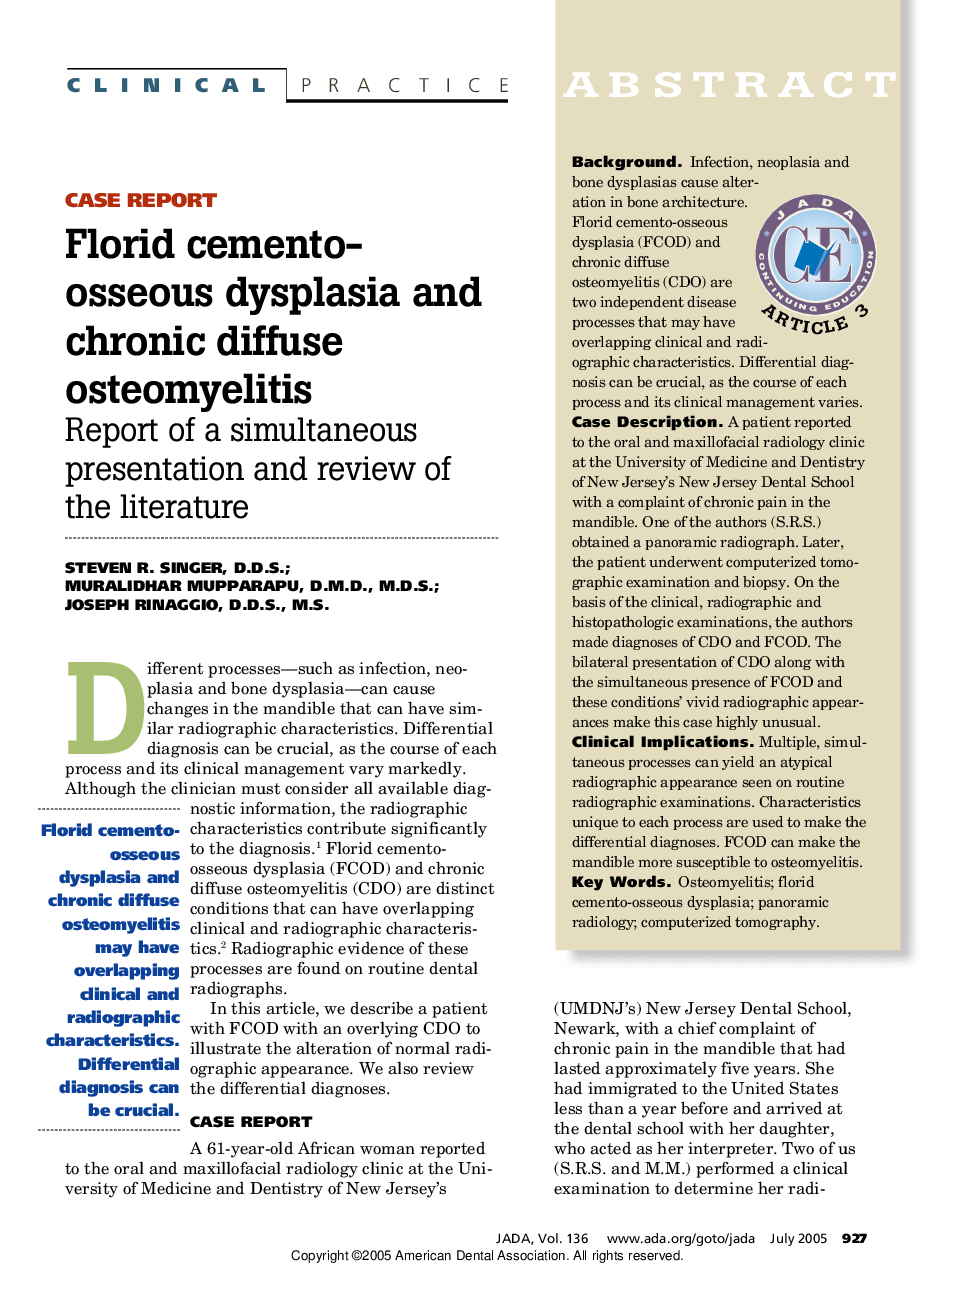 Florid cemento-osseous dysplasia and chronic diffuse osteomyelitis